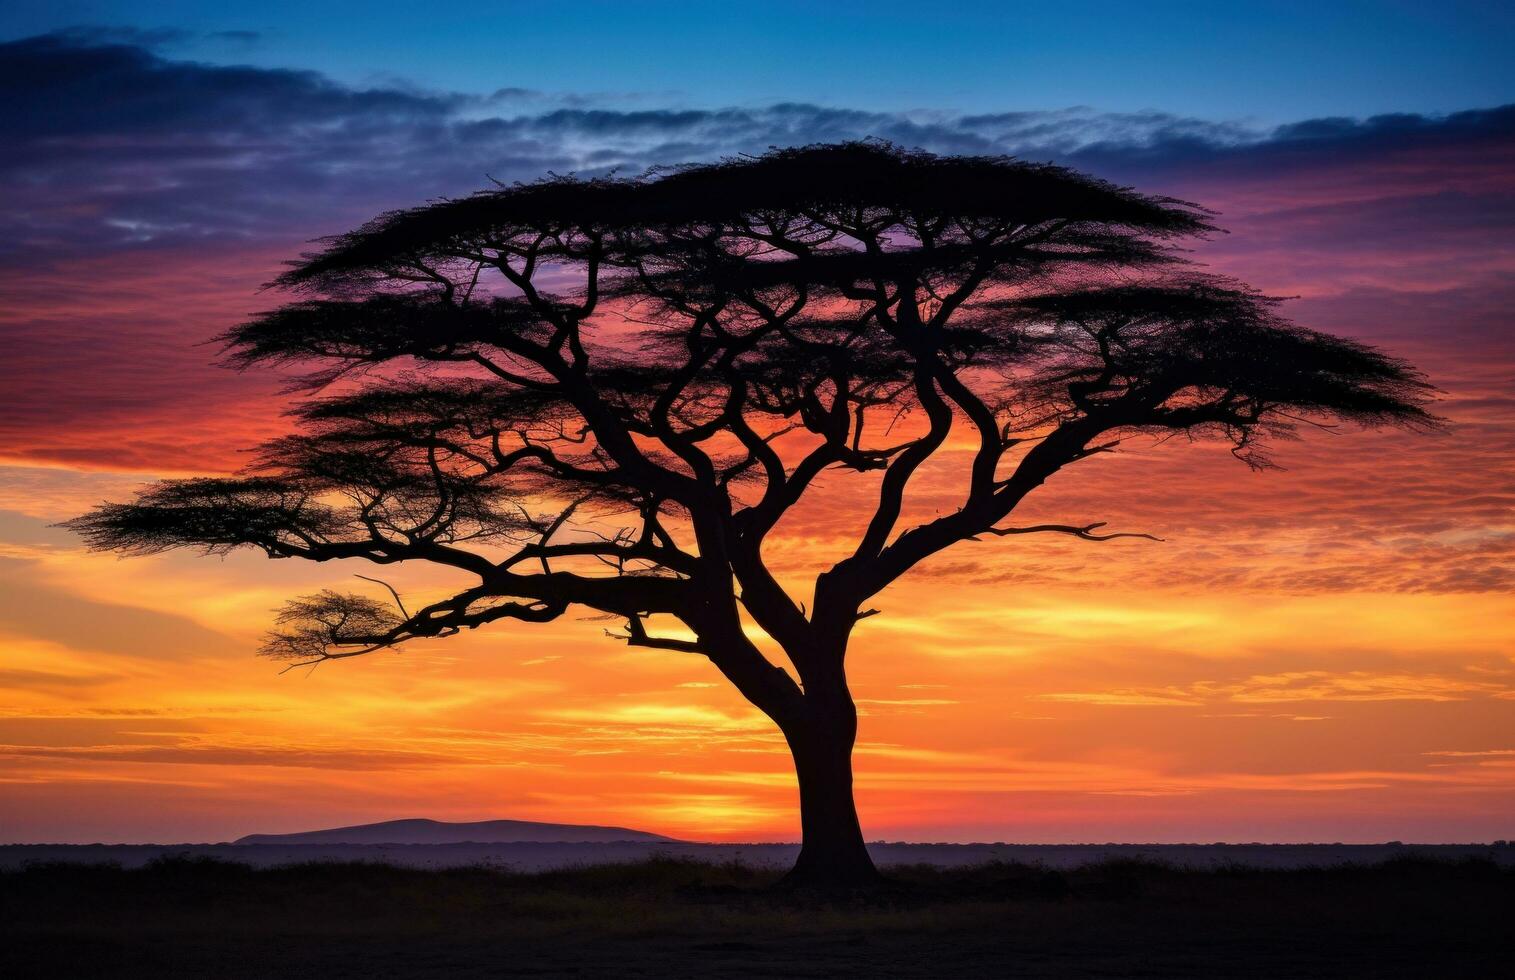 AI generated a silhouette acacia tree against the sky photo